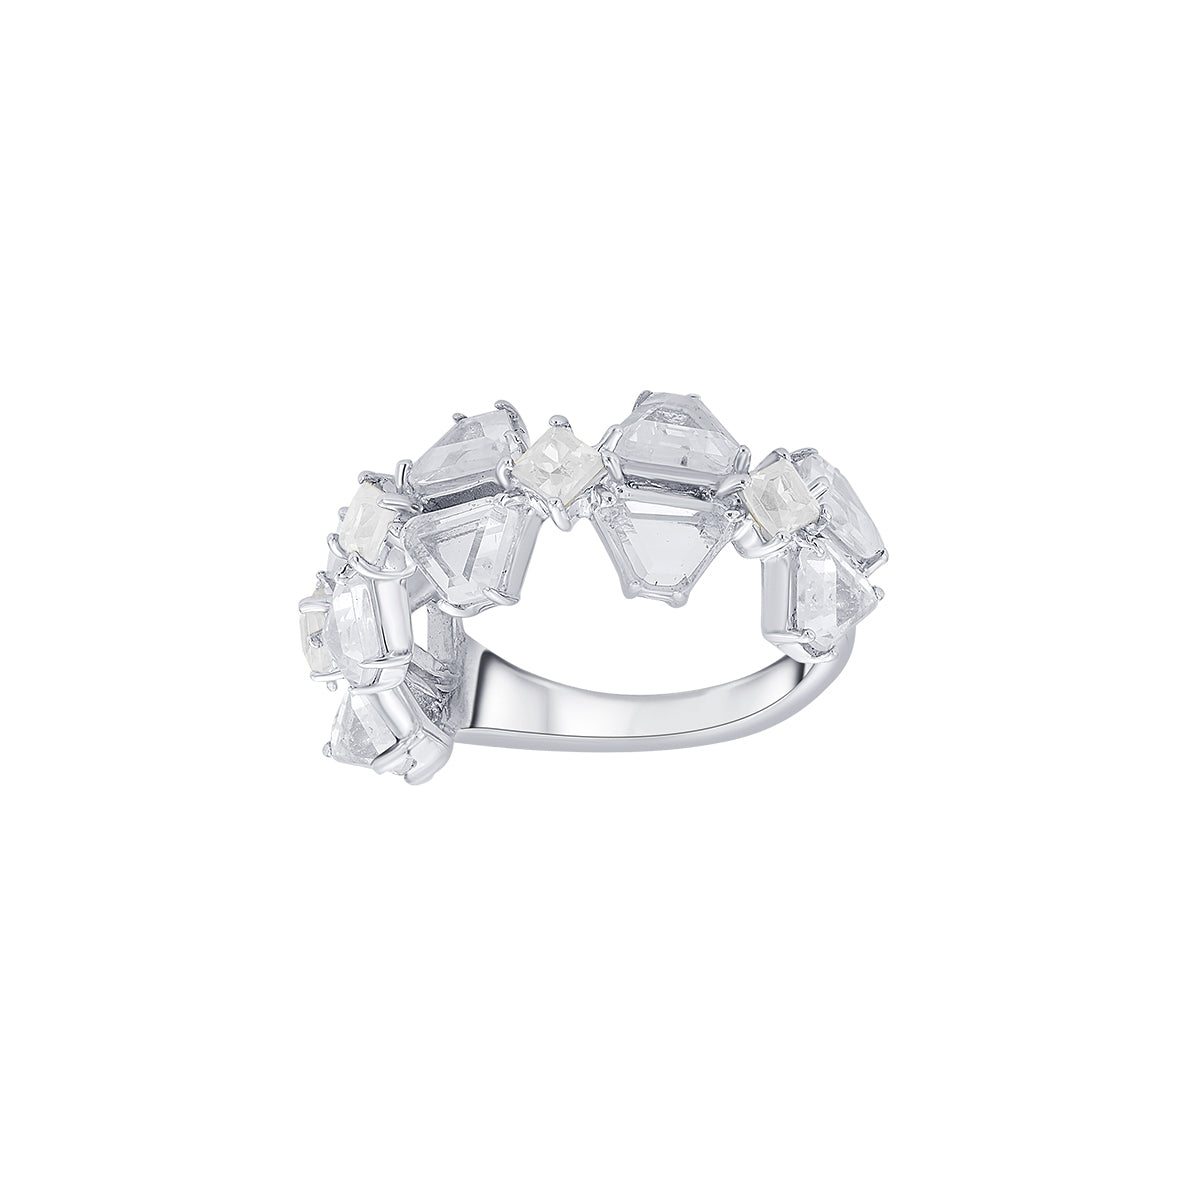 Bahamas 925 Silver Ring - Isharya | Modern Indian Jewelry